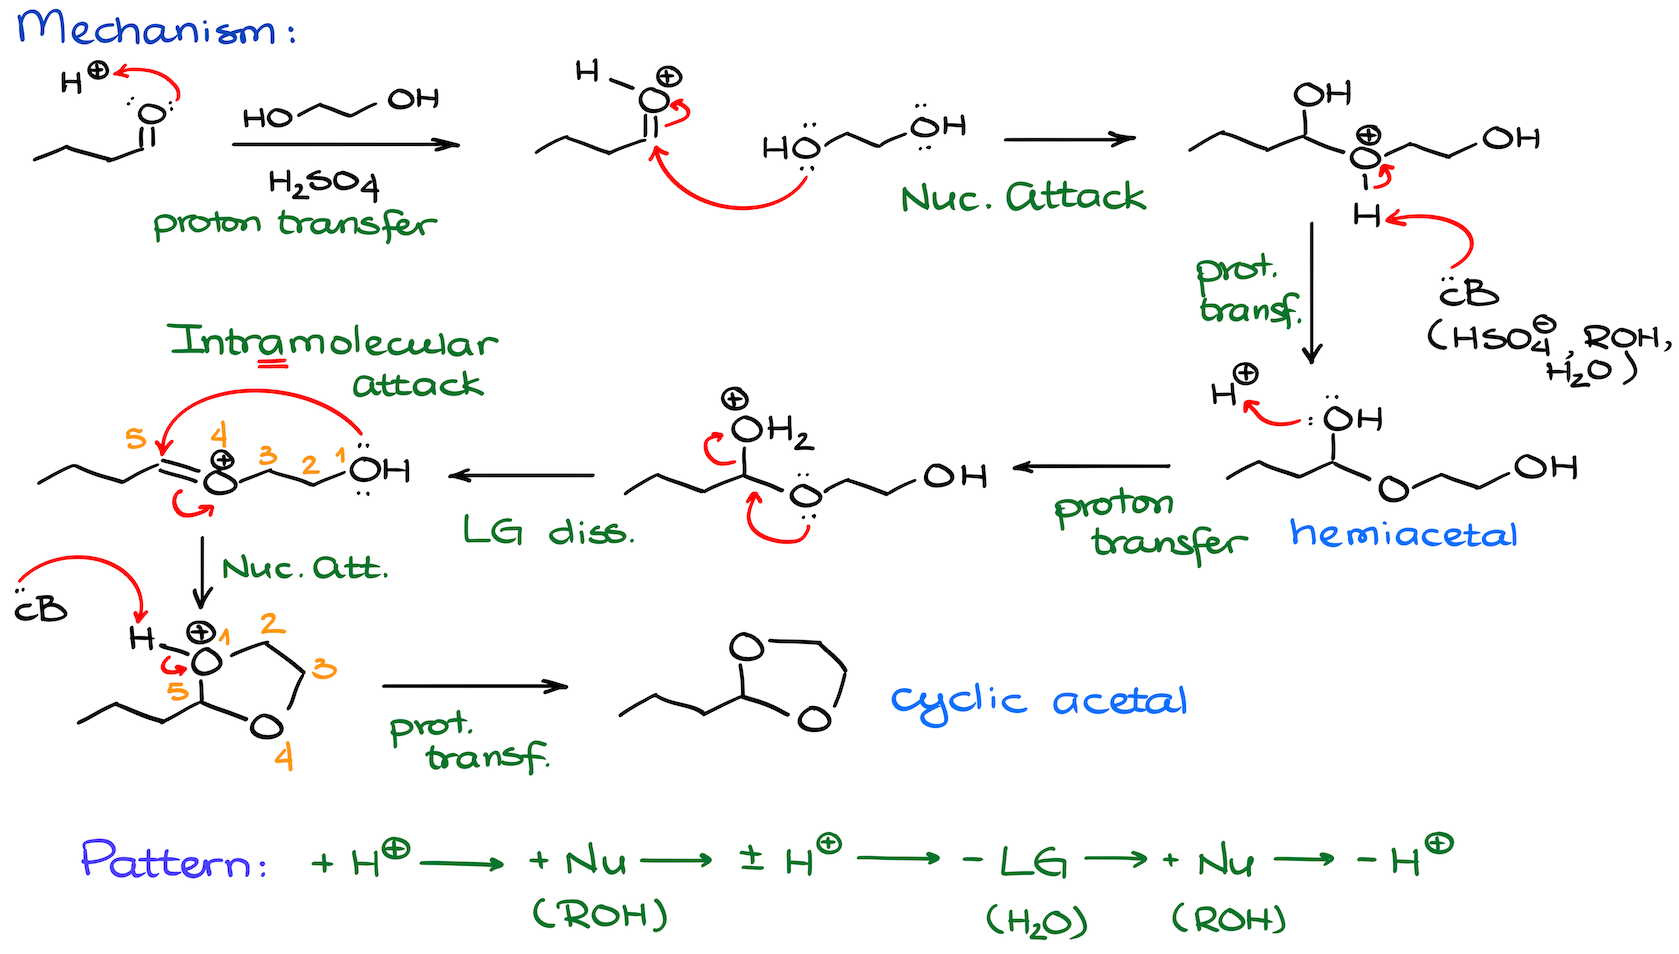 mechanism of cyclic acetal formation